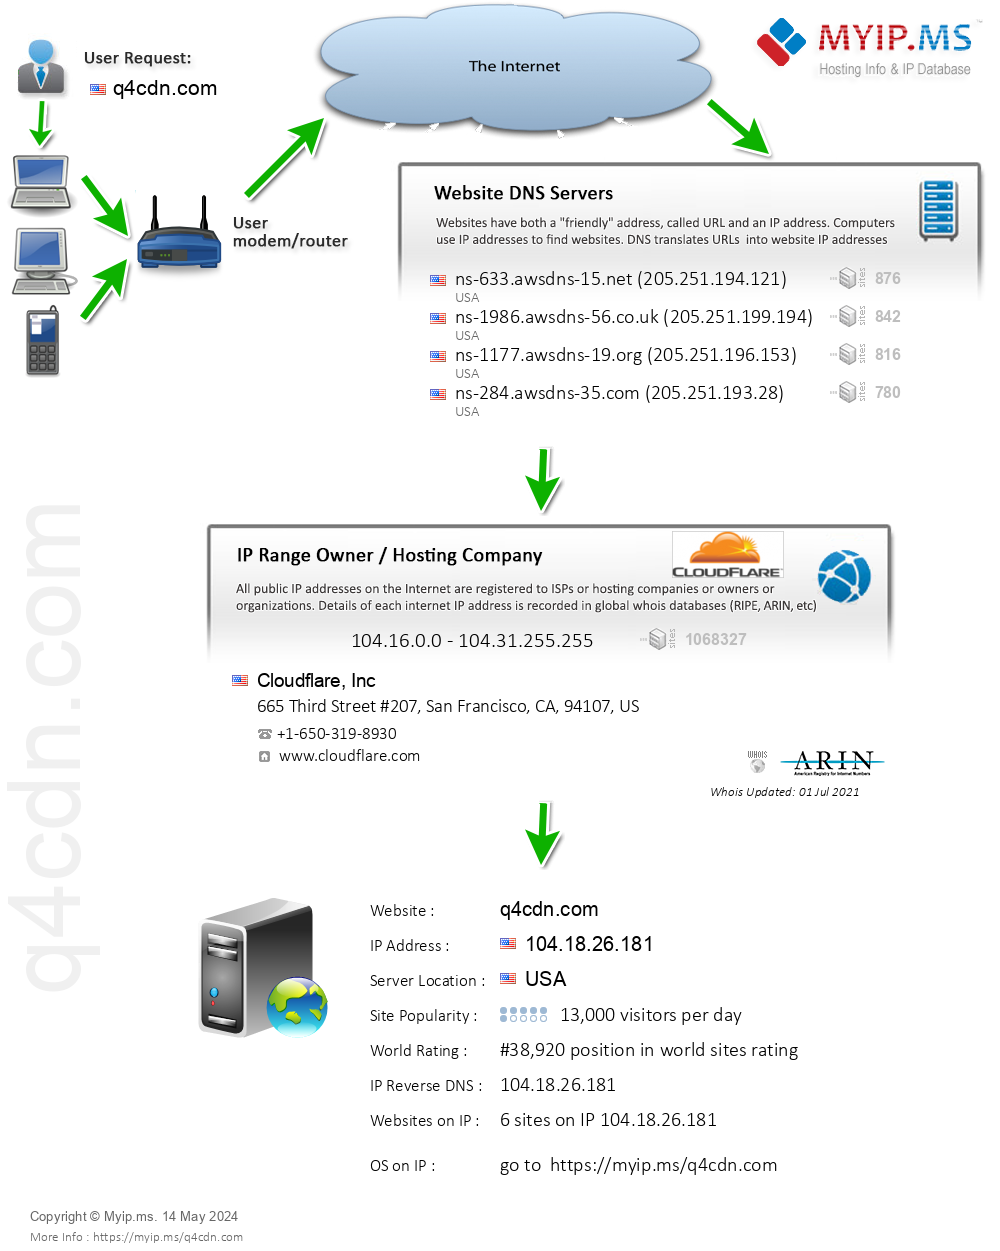 Q4cdn.com - Website Hosting Visual IP Diagram